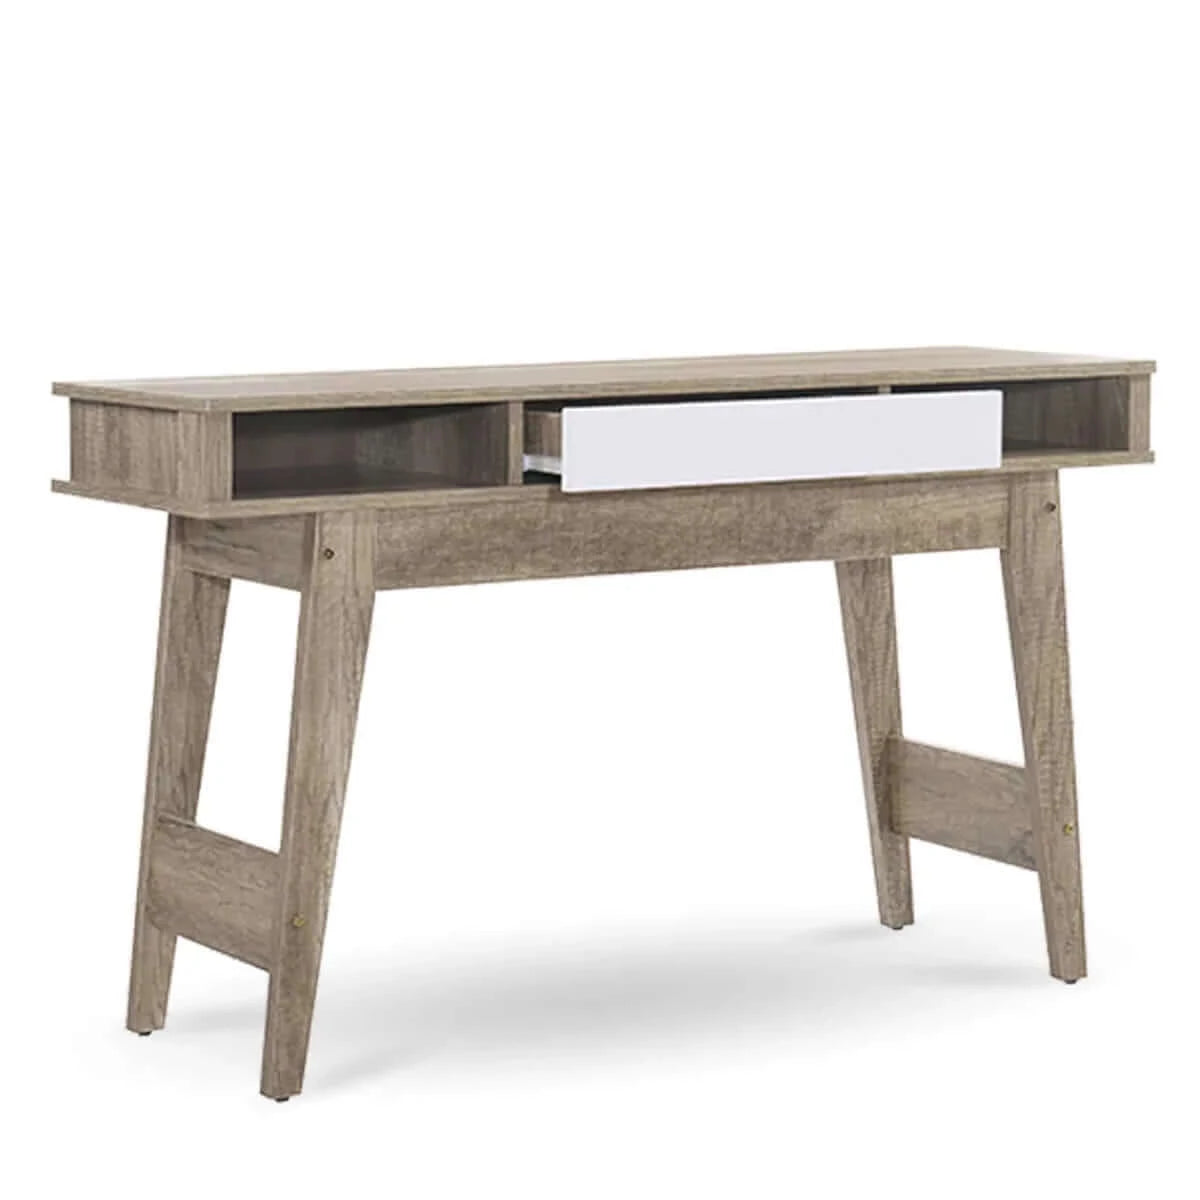 Buy console hallway table oak - upinteriors-Upinteriors